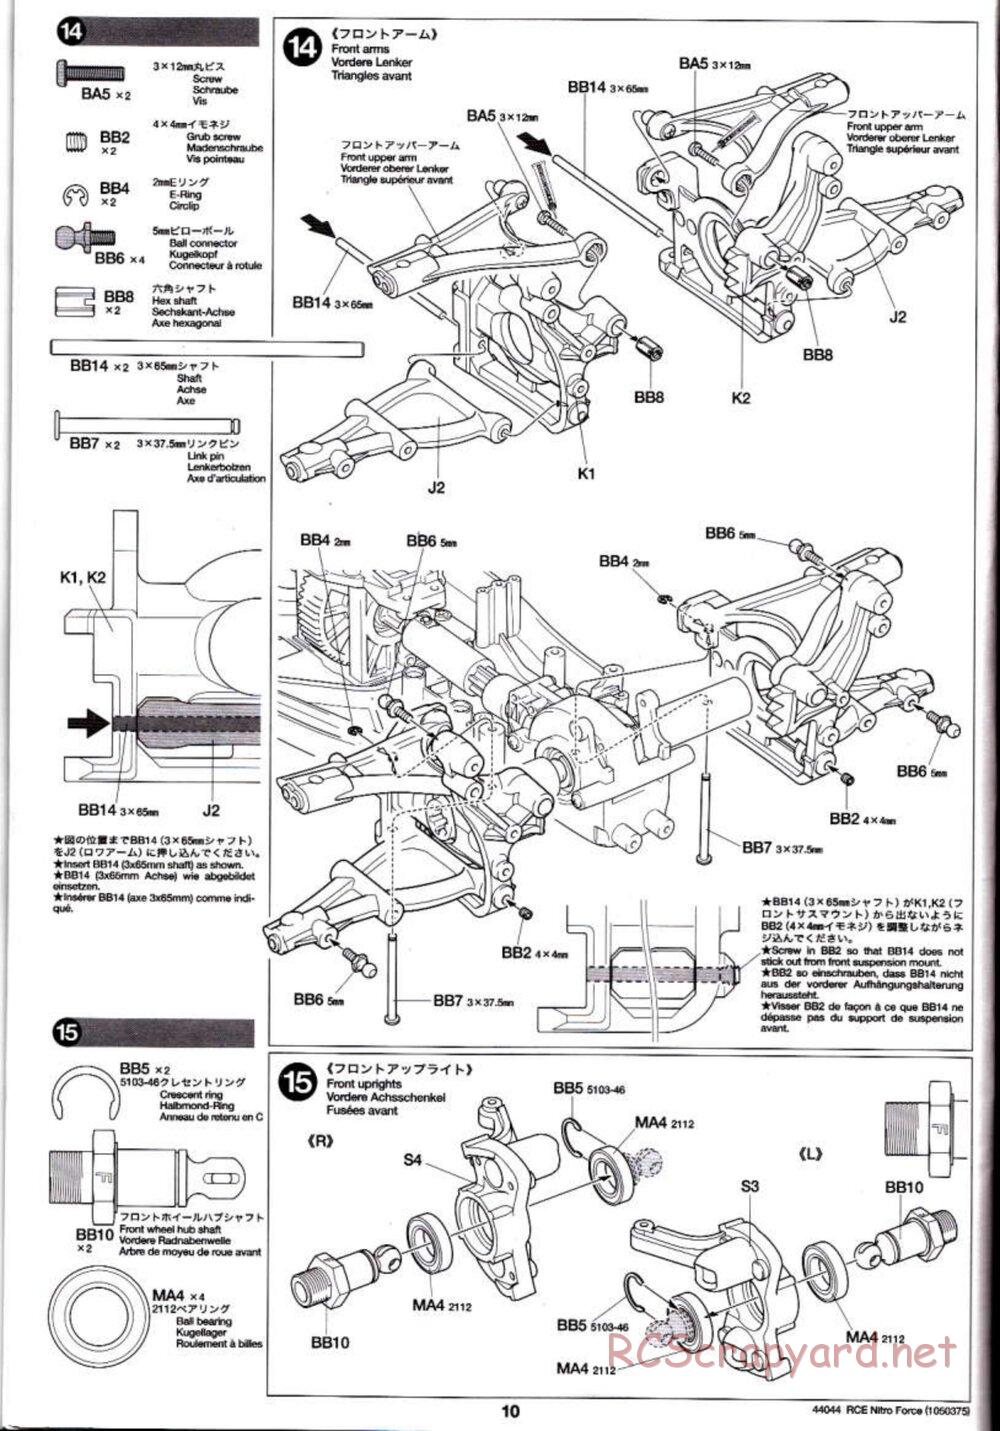 Tamiya - Nitro Force - NDF-01 Chassis - Manual - Page 10